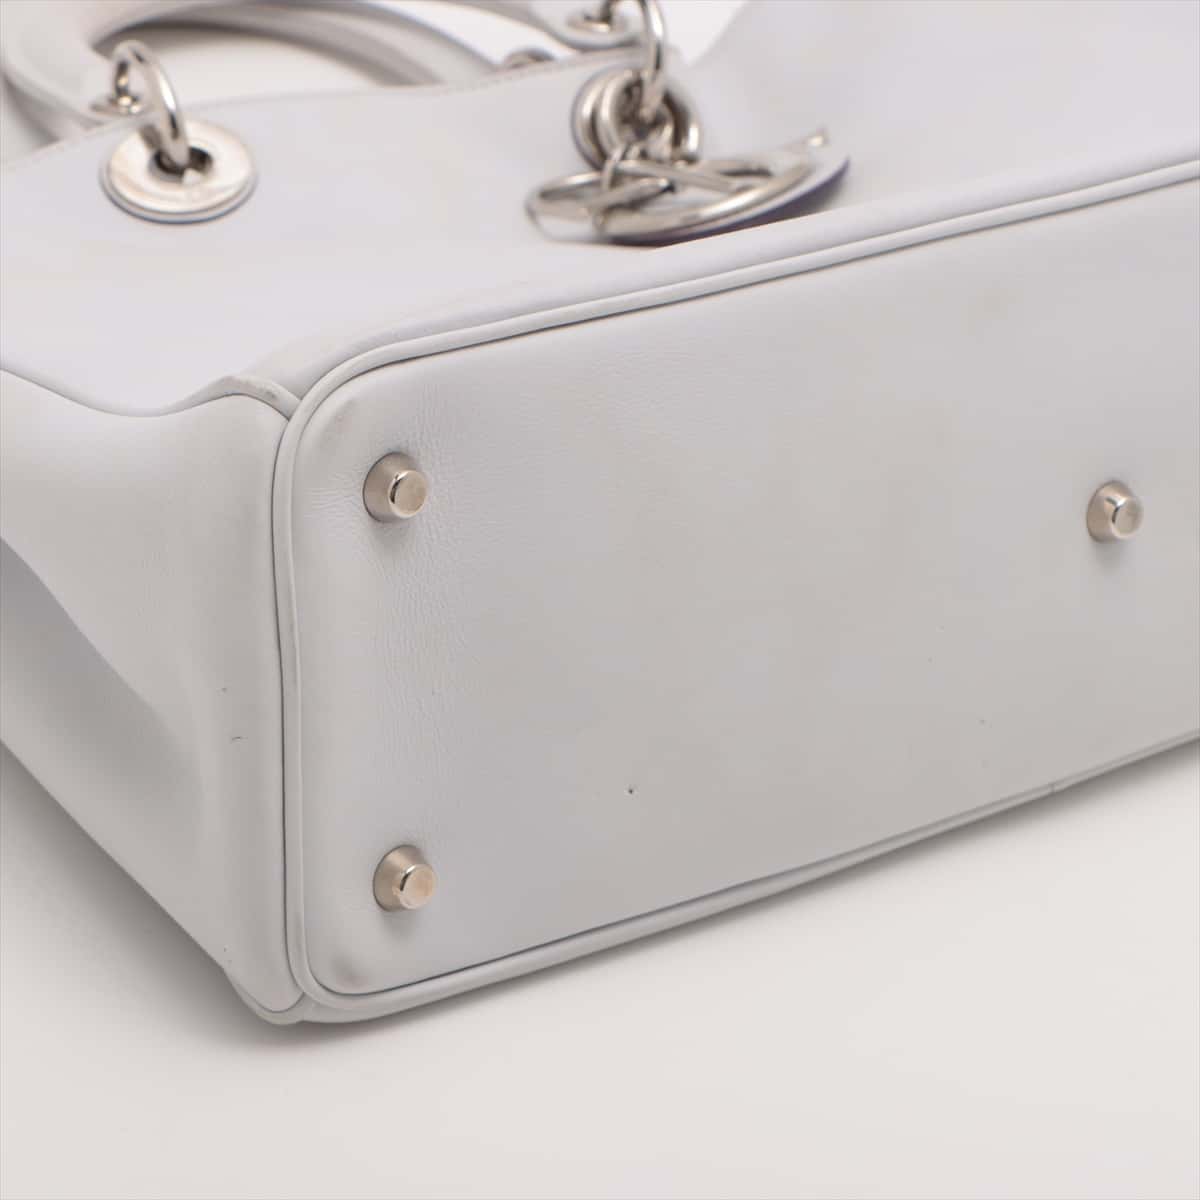 Christian Dior Diorissimo Leather 2way handbag Grey open papers